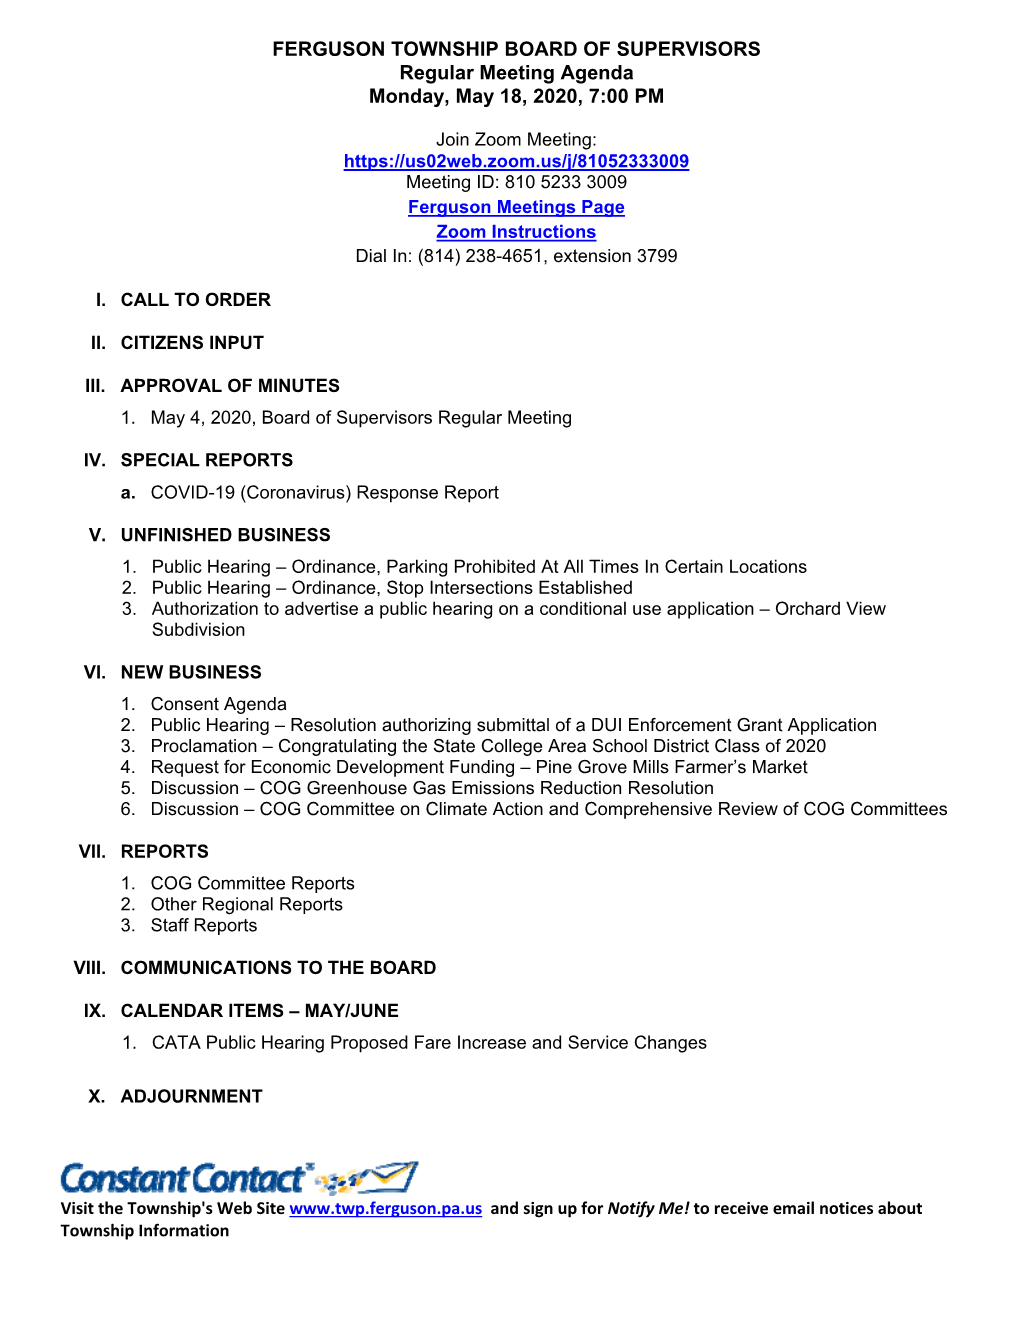 FERGUSON TOWNSHIP BOARD of SUPERVISORS Regular Meeting Agenda Monday, May 18, 2020, 7:00 PM